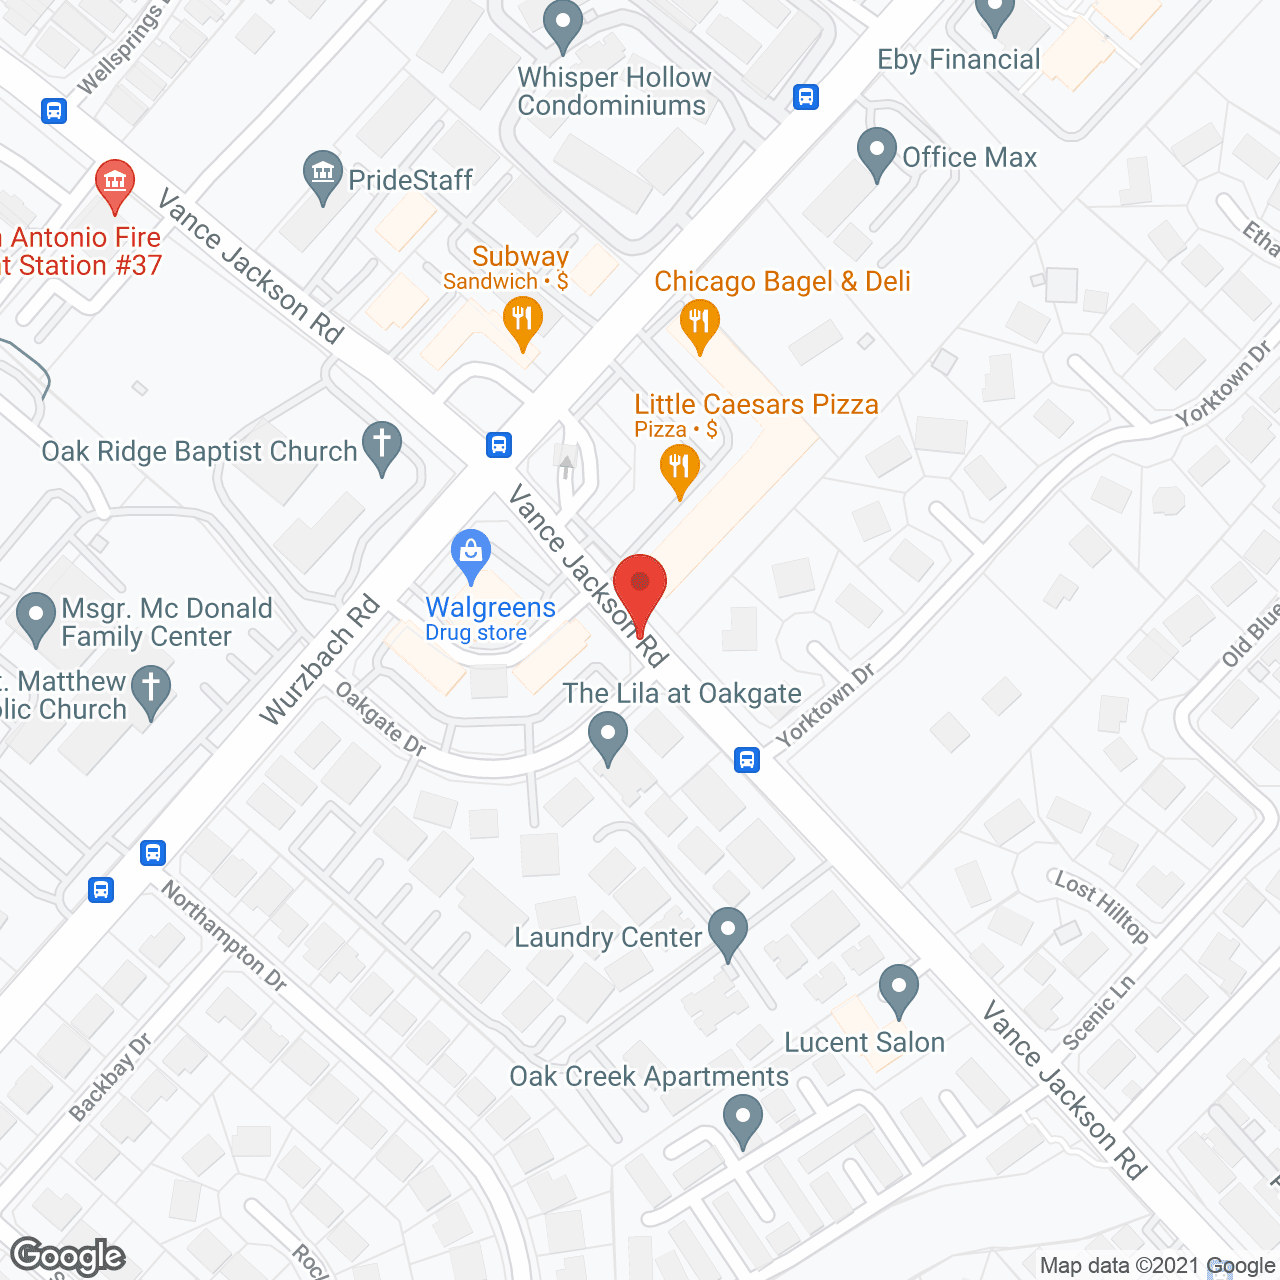 Cardinal Senior Care - San Antonio, TX in google map